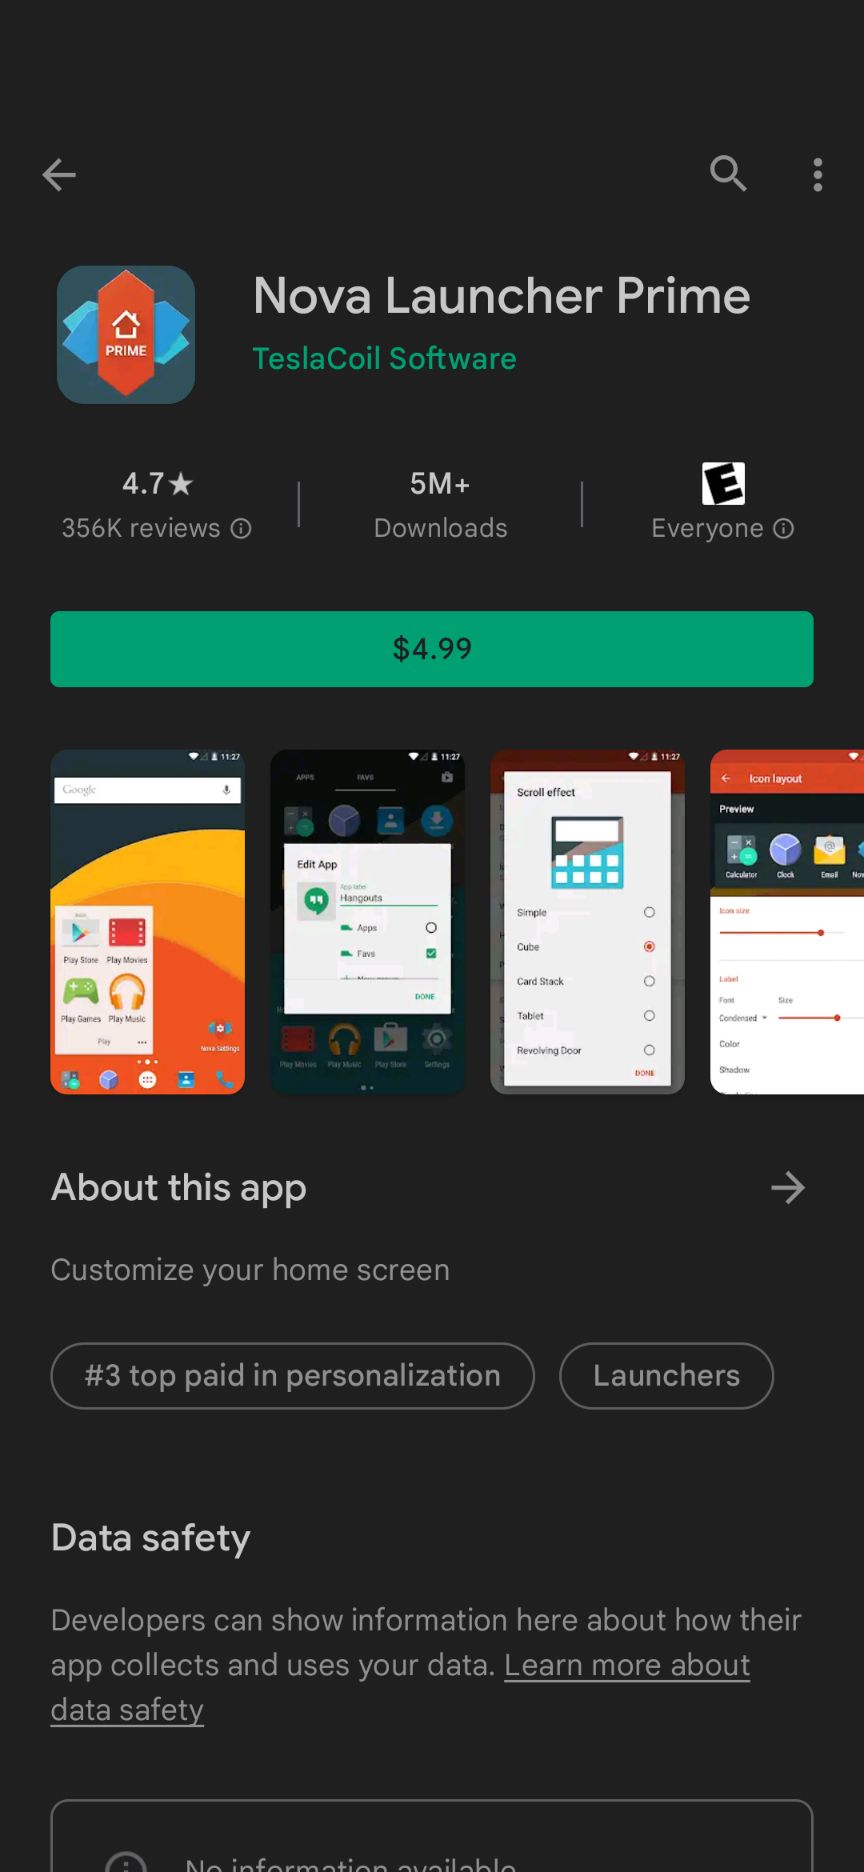 The Nova Launcher Prime Google Play Store listing.